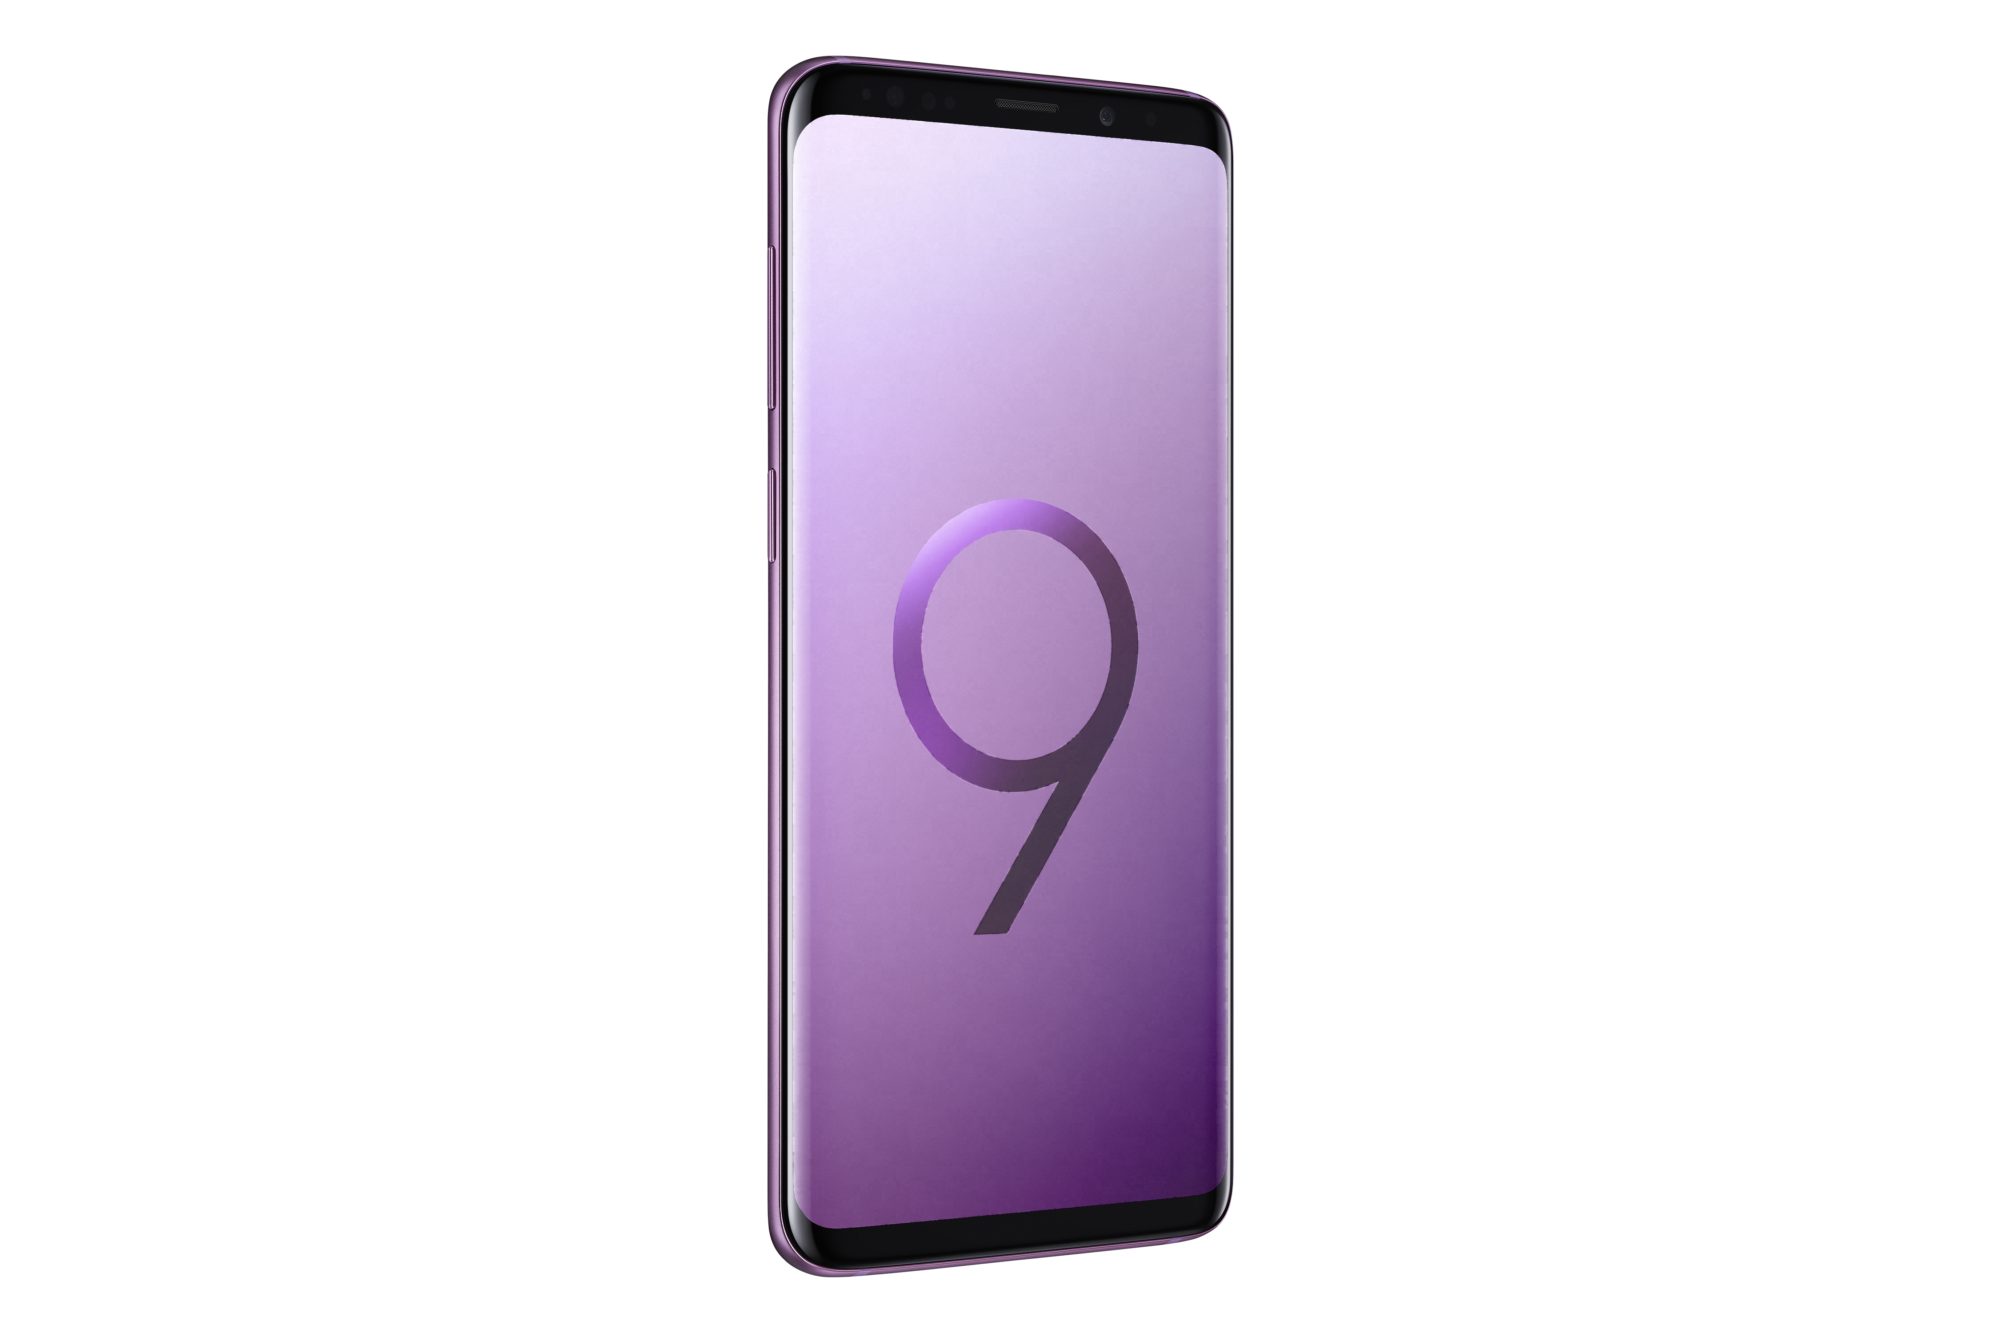 Samsung Galaxy S9 and S9+ lilac purple